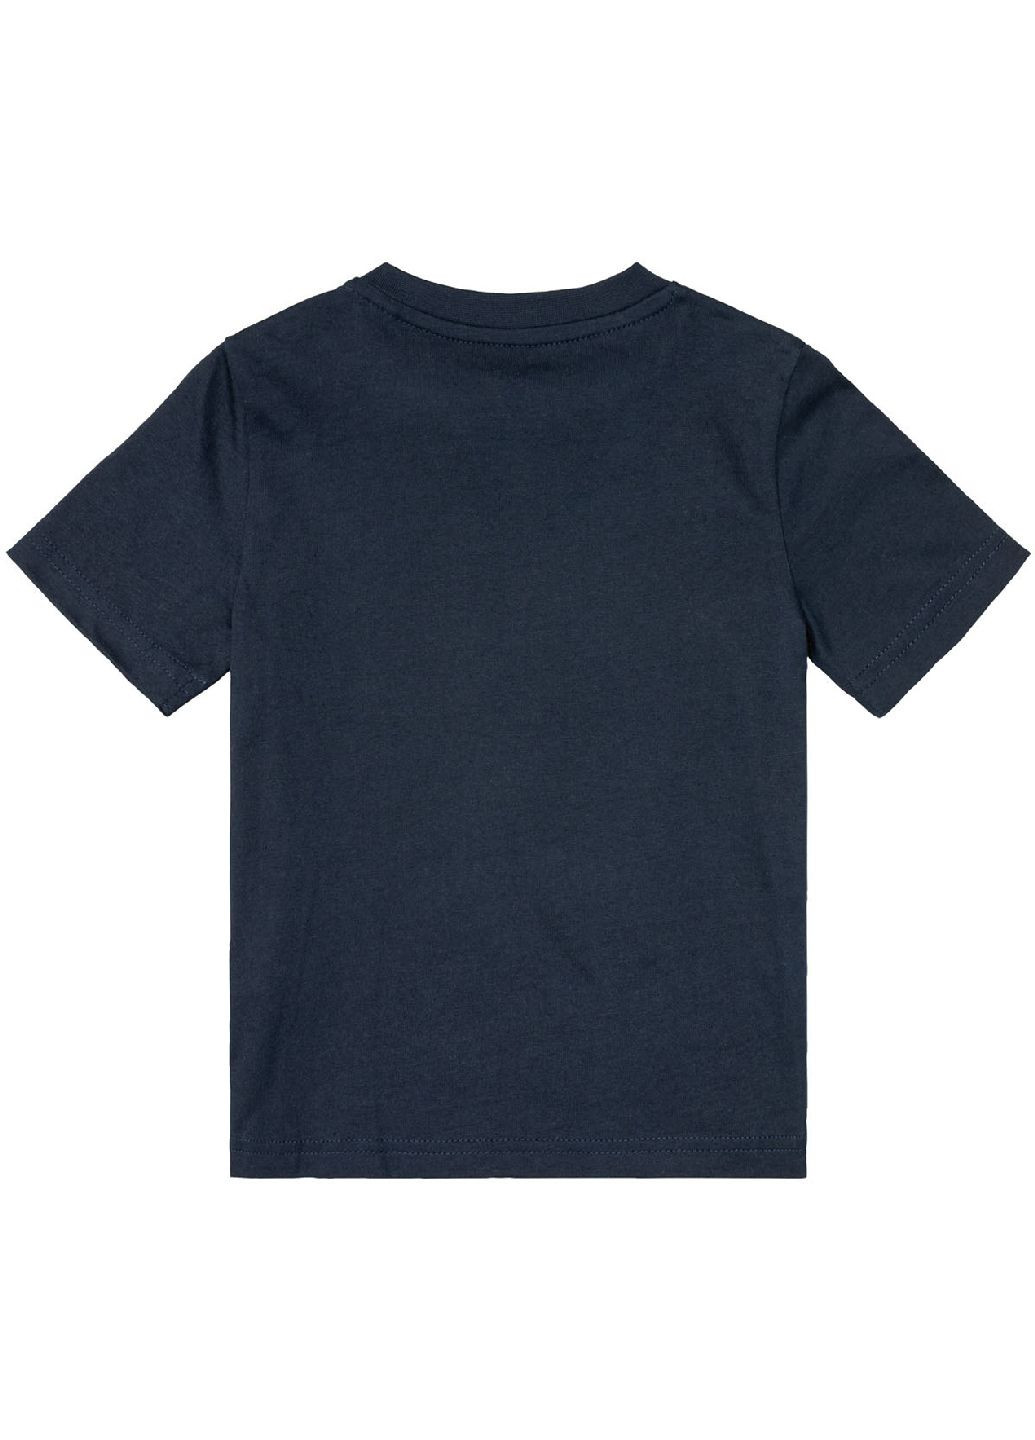 Темно-синяя всесезон пижама (футболка, шорты) футболка + шорты Lupilu